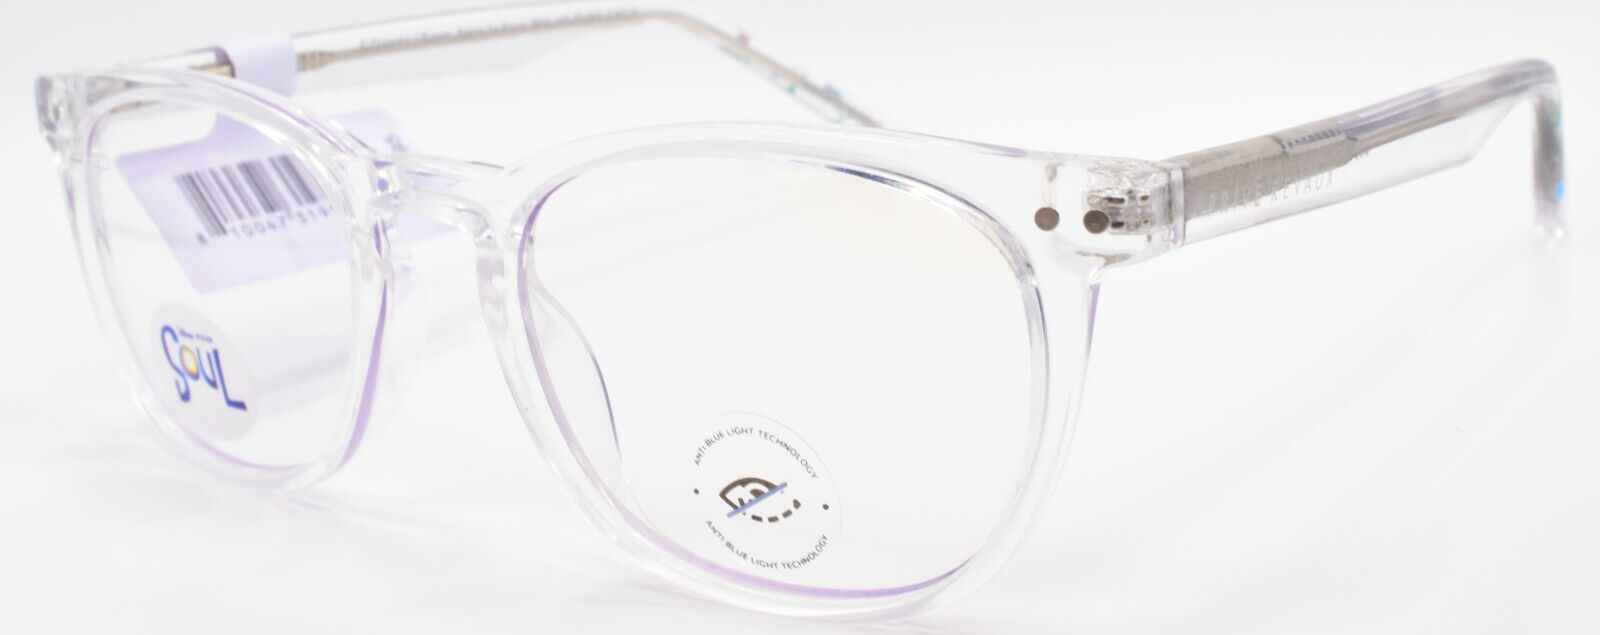 1-Prive Revaux x Disney Born To Play Eyeglasses Blue Light Small RX-ready Crystal-810047319542-IKSpecs